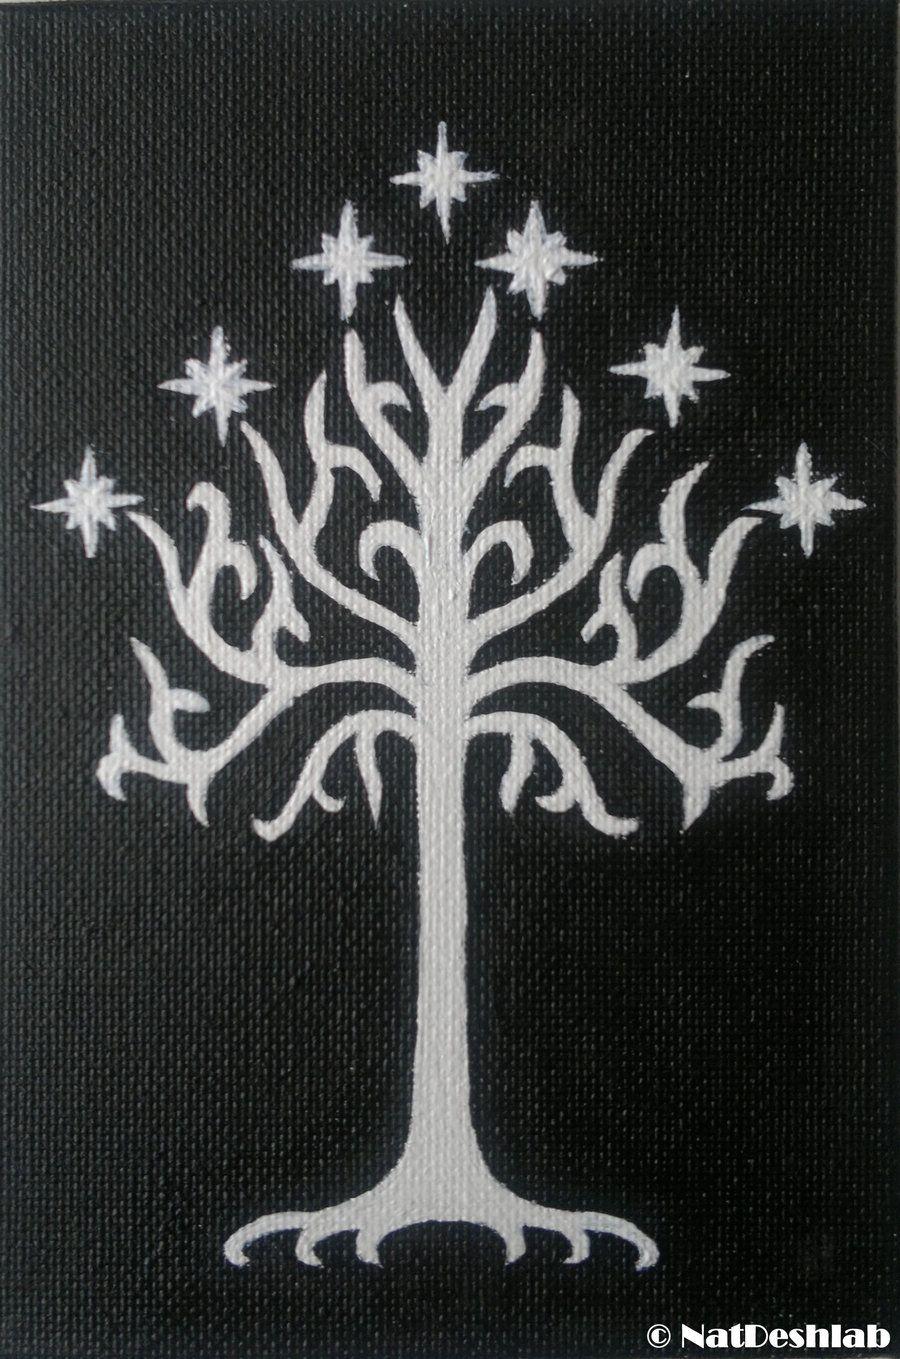 Tree Of Gondor Wallpaper, 49 Tree Of Gondor Image for Free 2MTX